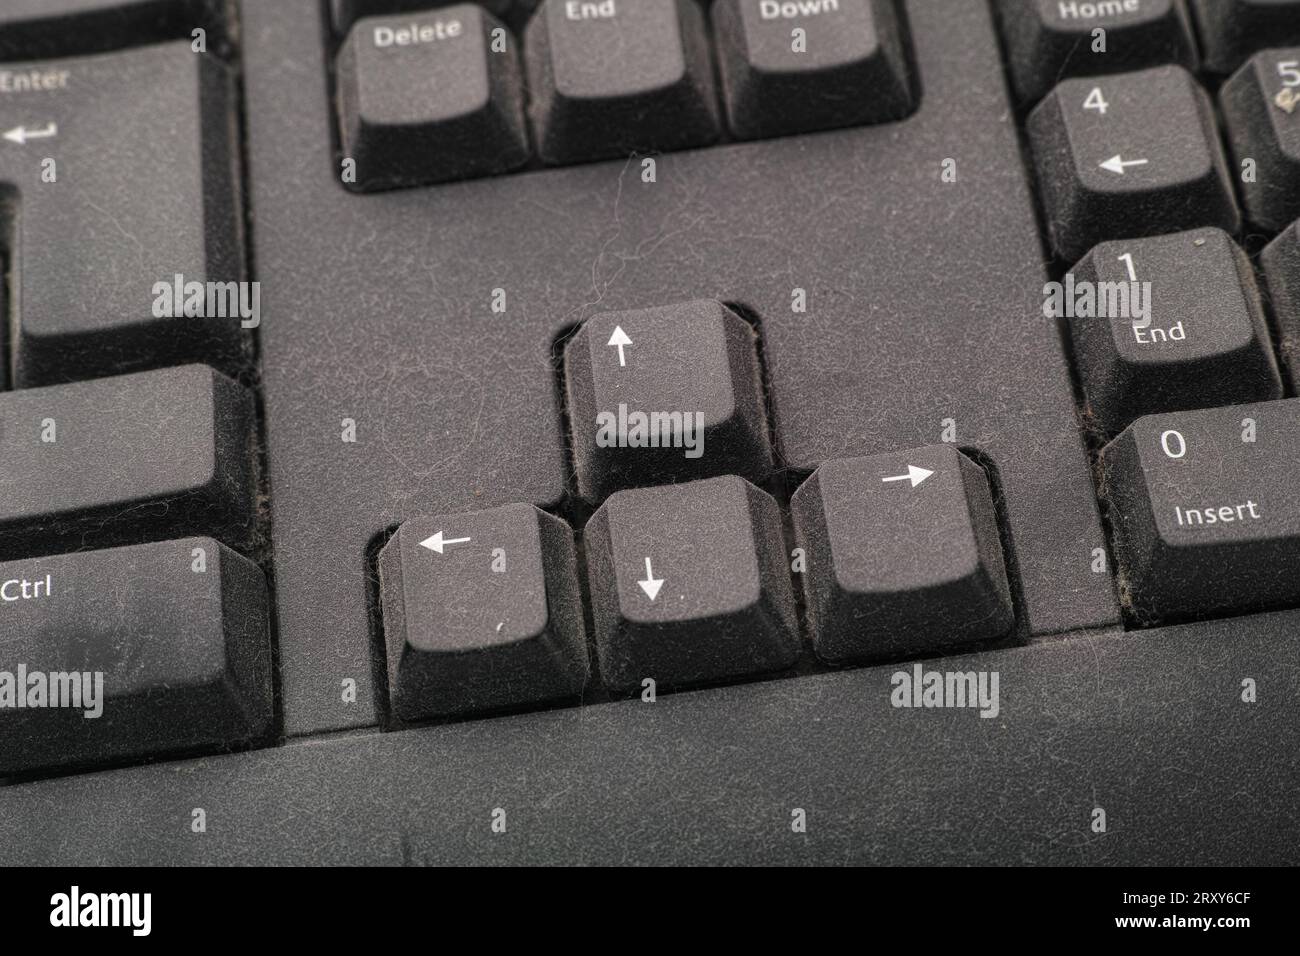 The arrow keys of a black dusty computer keyboard. Close up. Stock Photo